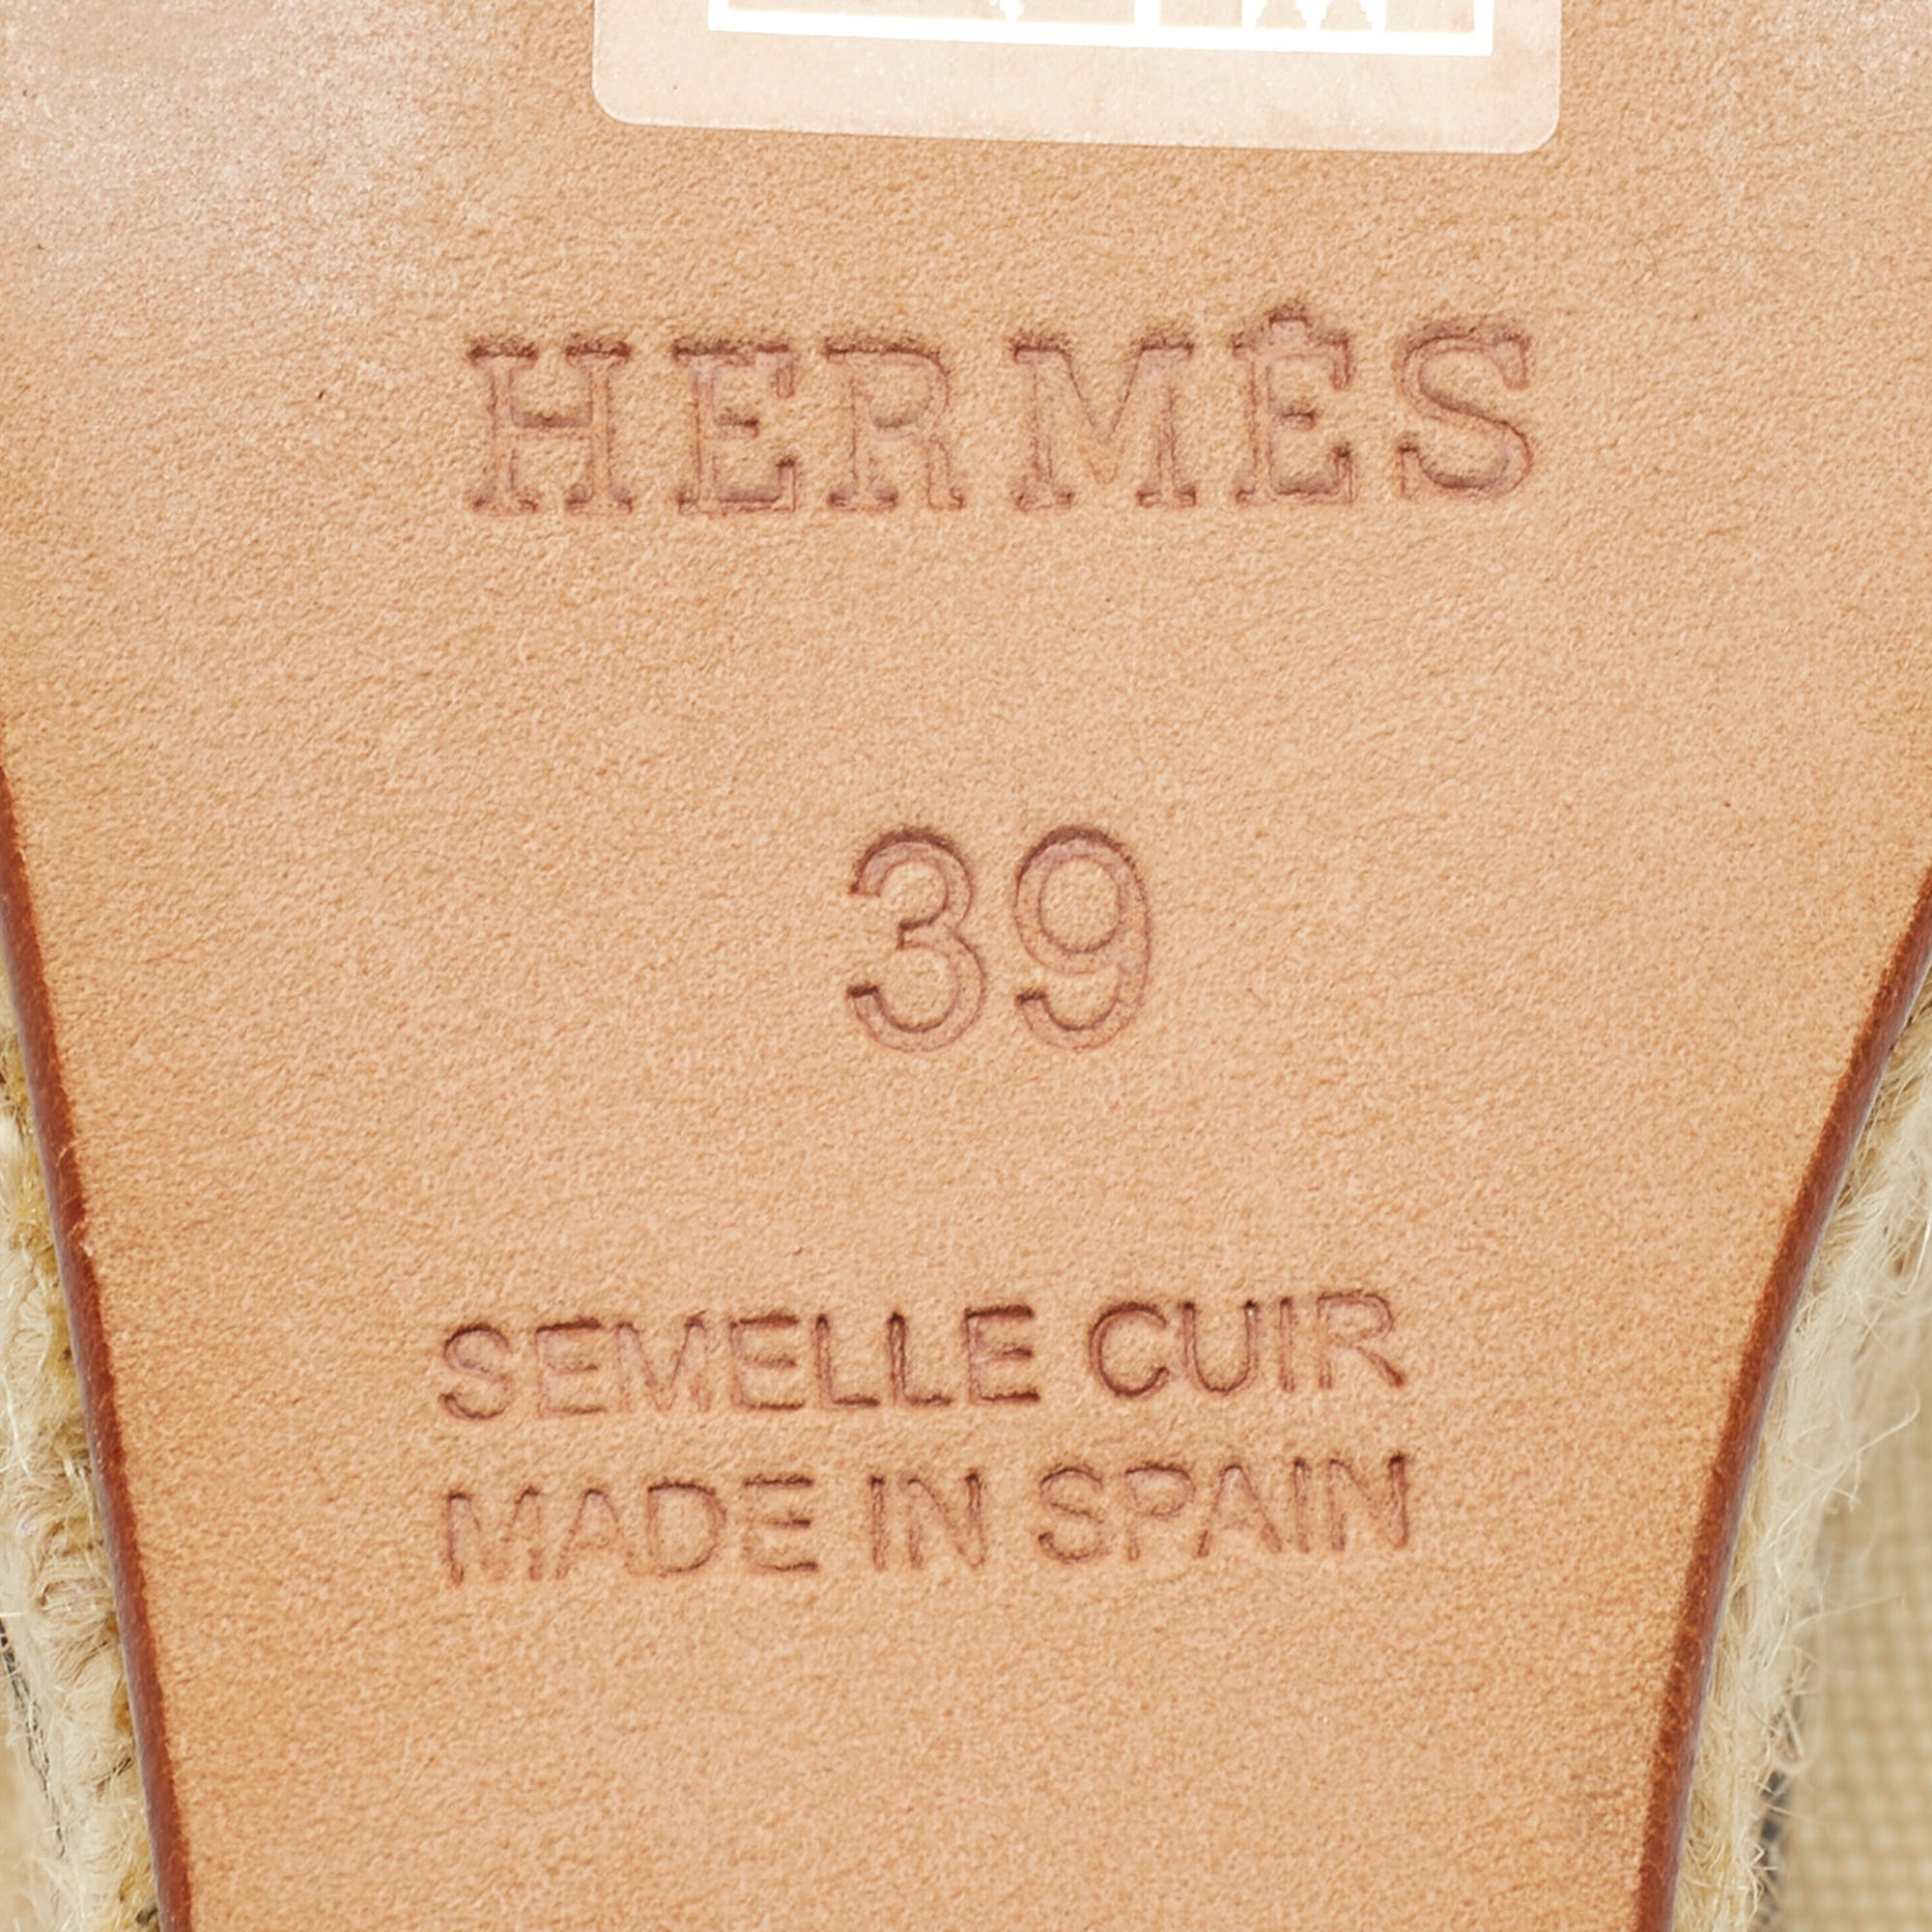 Hermes Beige Canvas Platform Espadrille Sandals Size 39